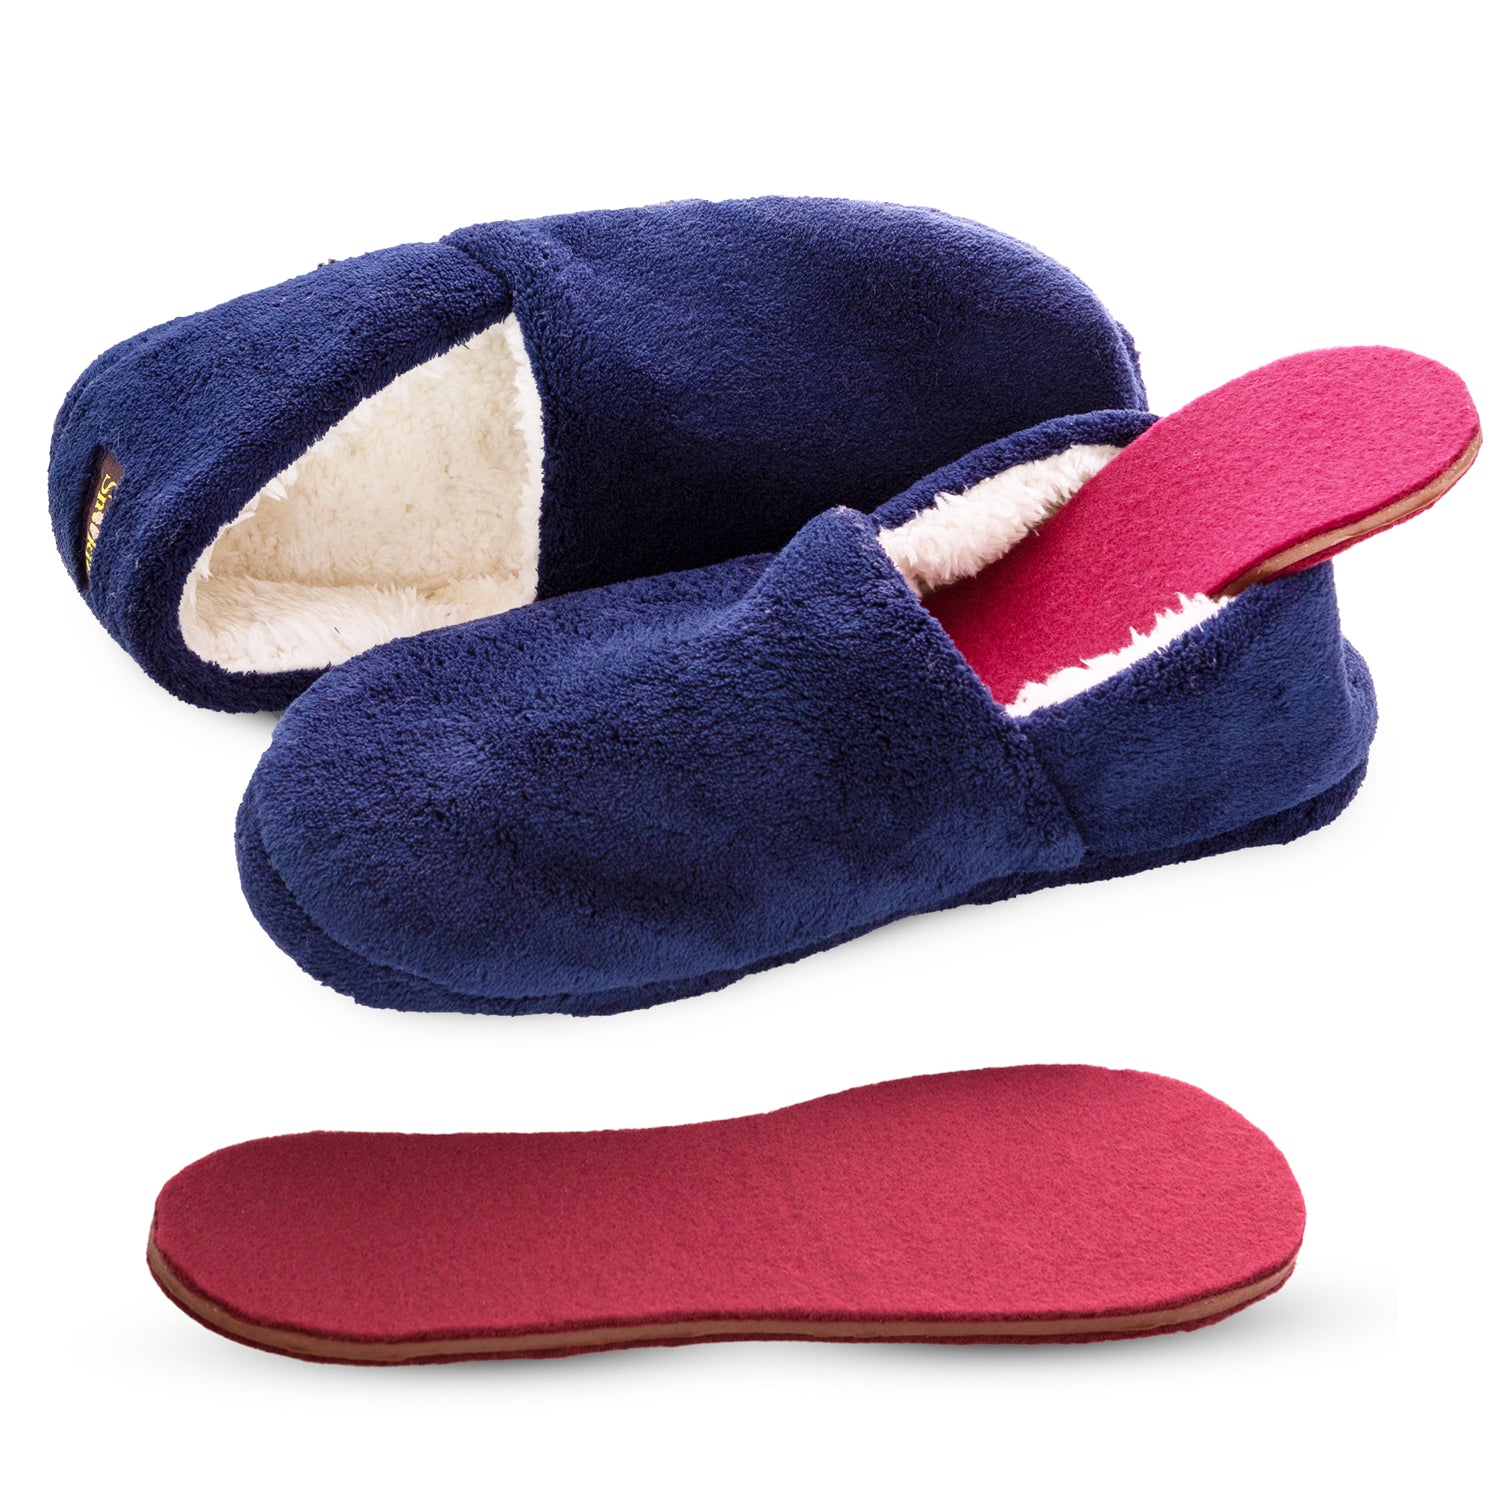 snookiz microwavable slippers